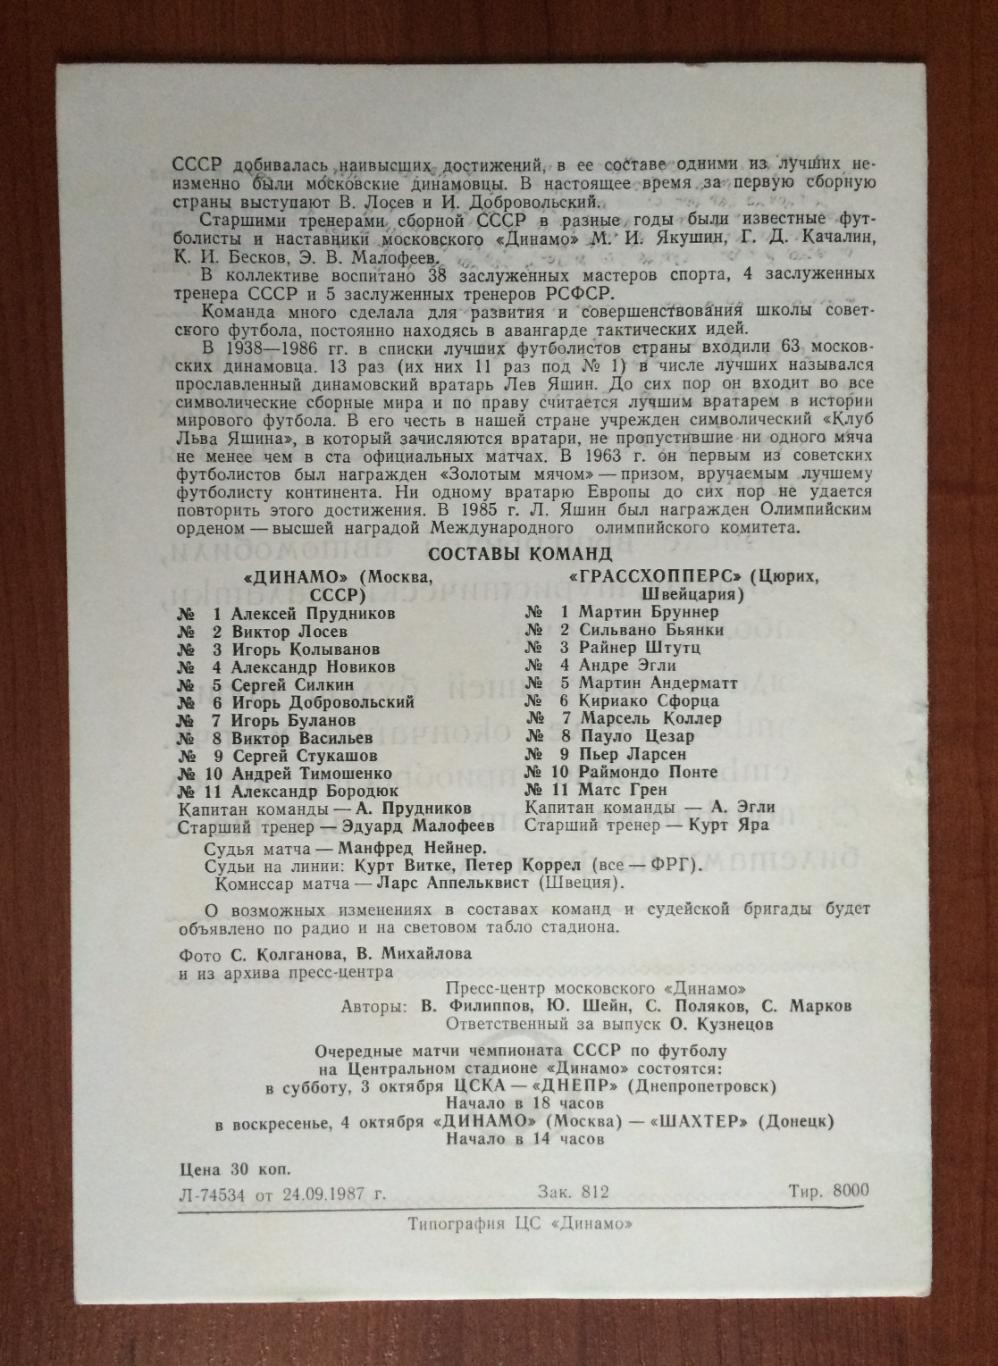 Программа Динамо Москва - Грассхоперс Швейцария 30.09.1987 год 1